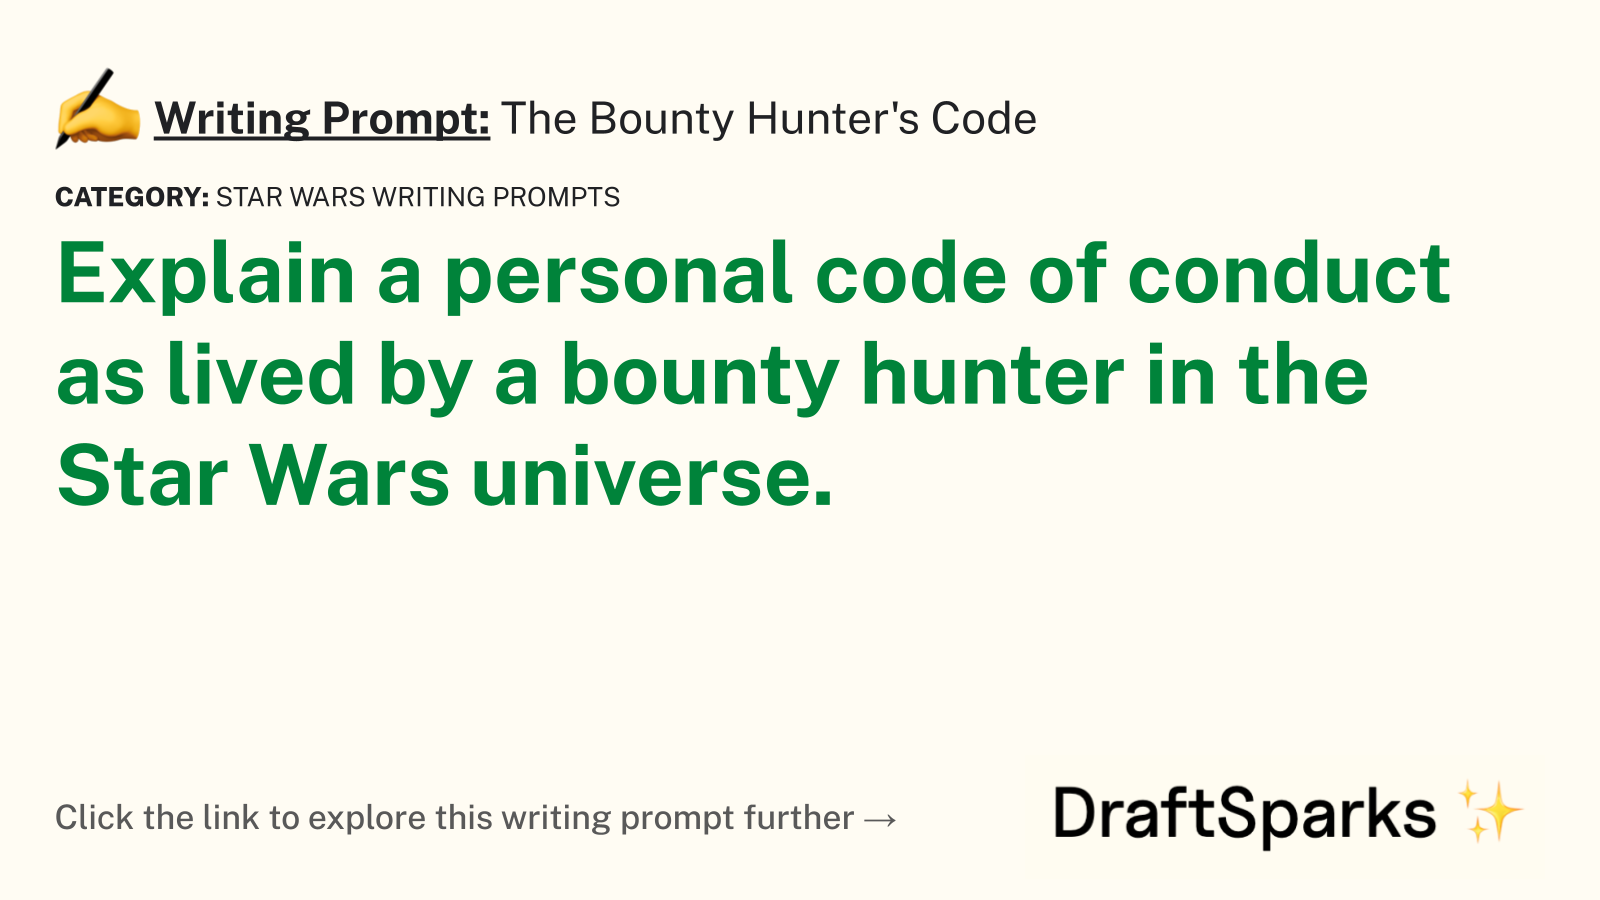 The Bounty Hunter’s Code